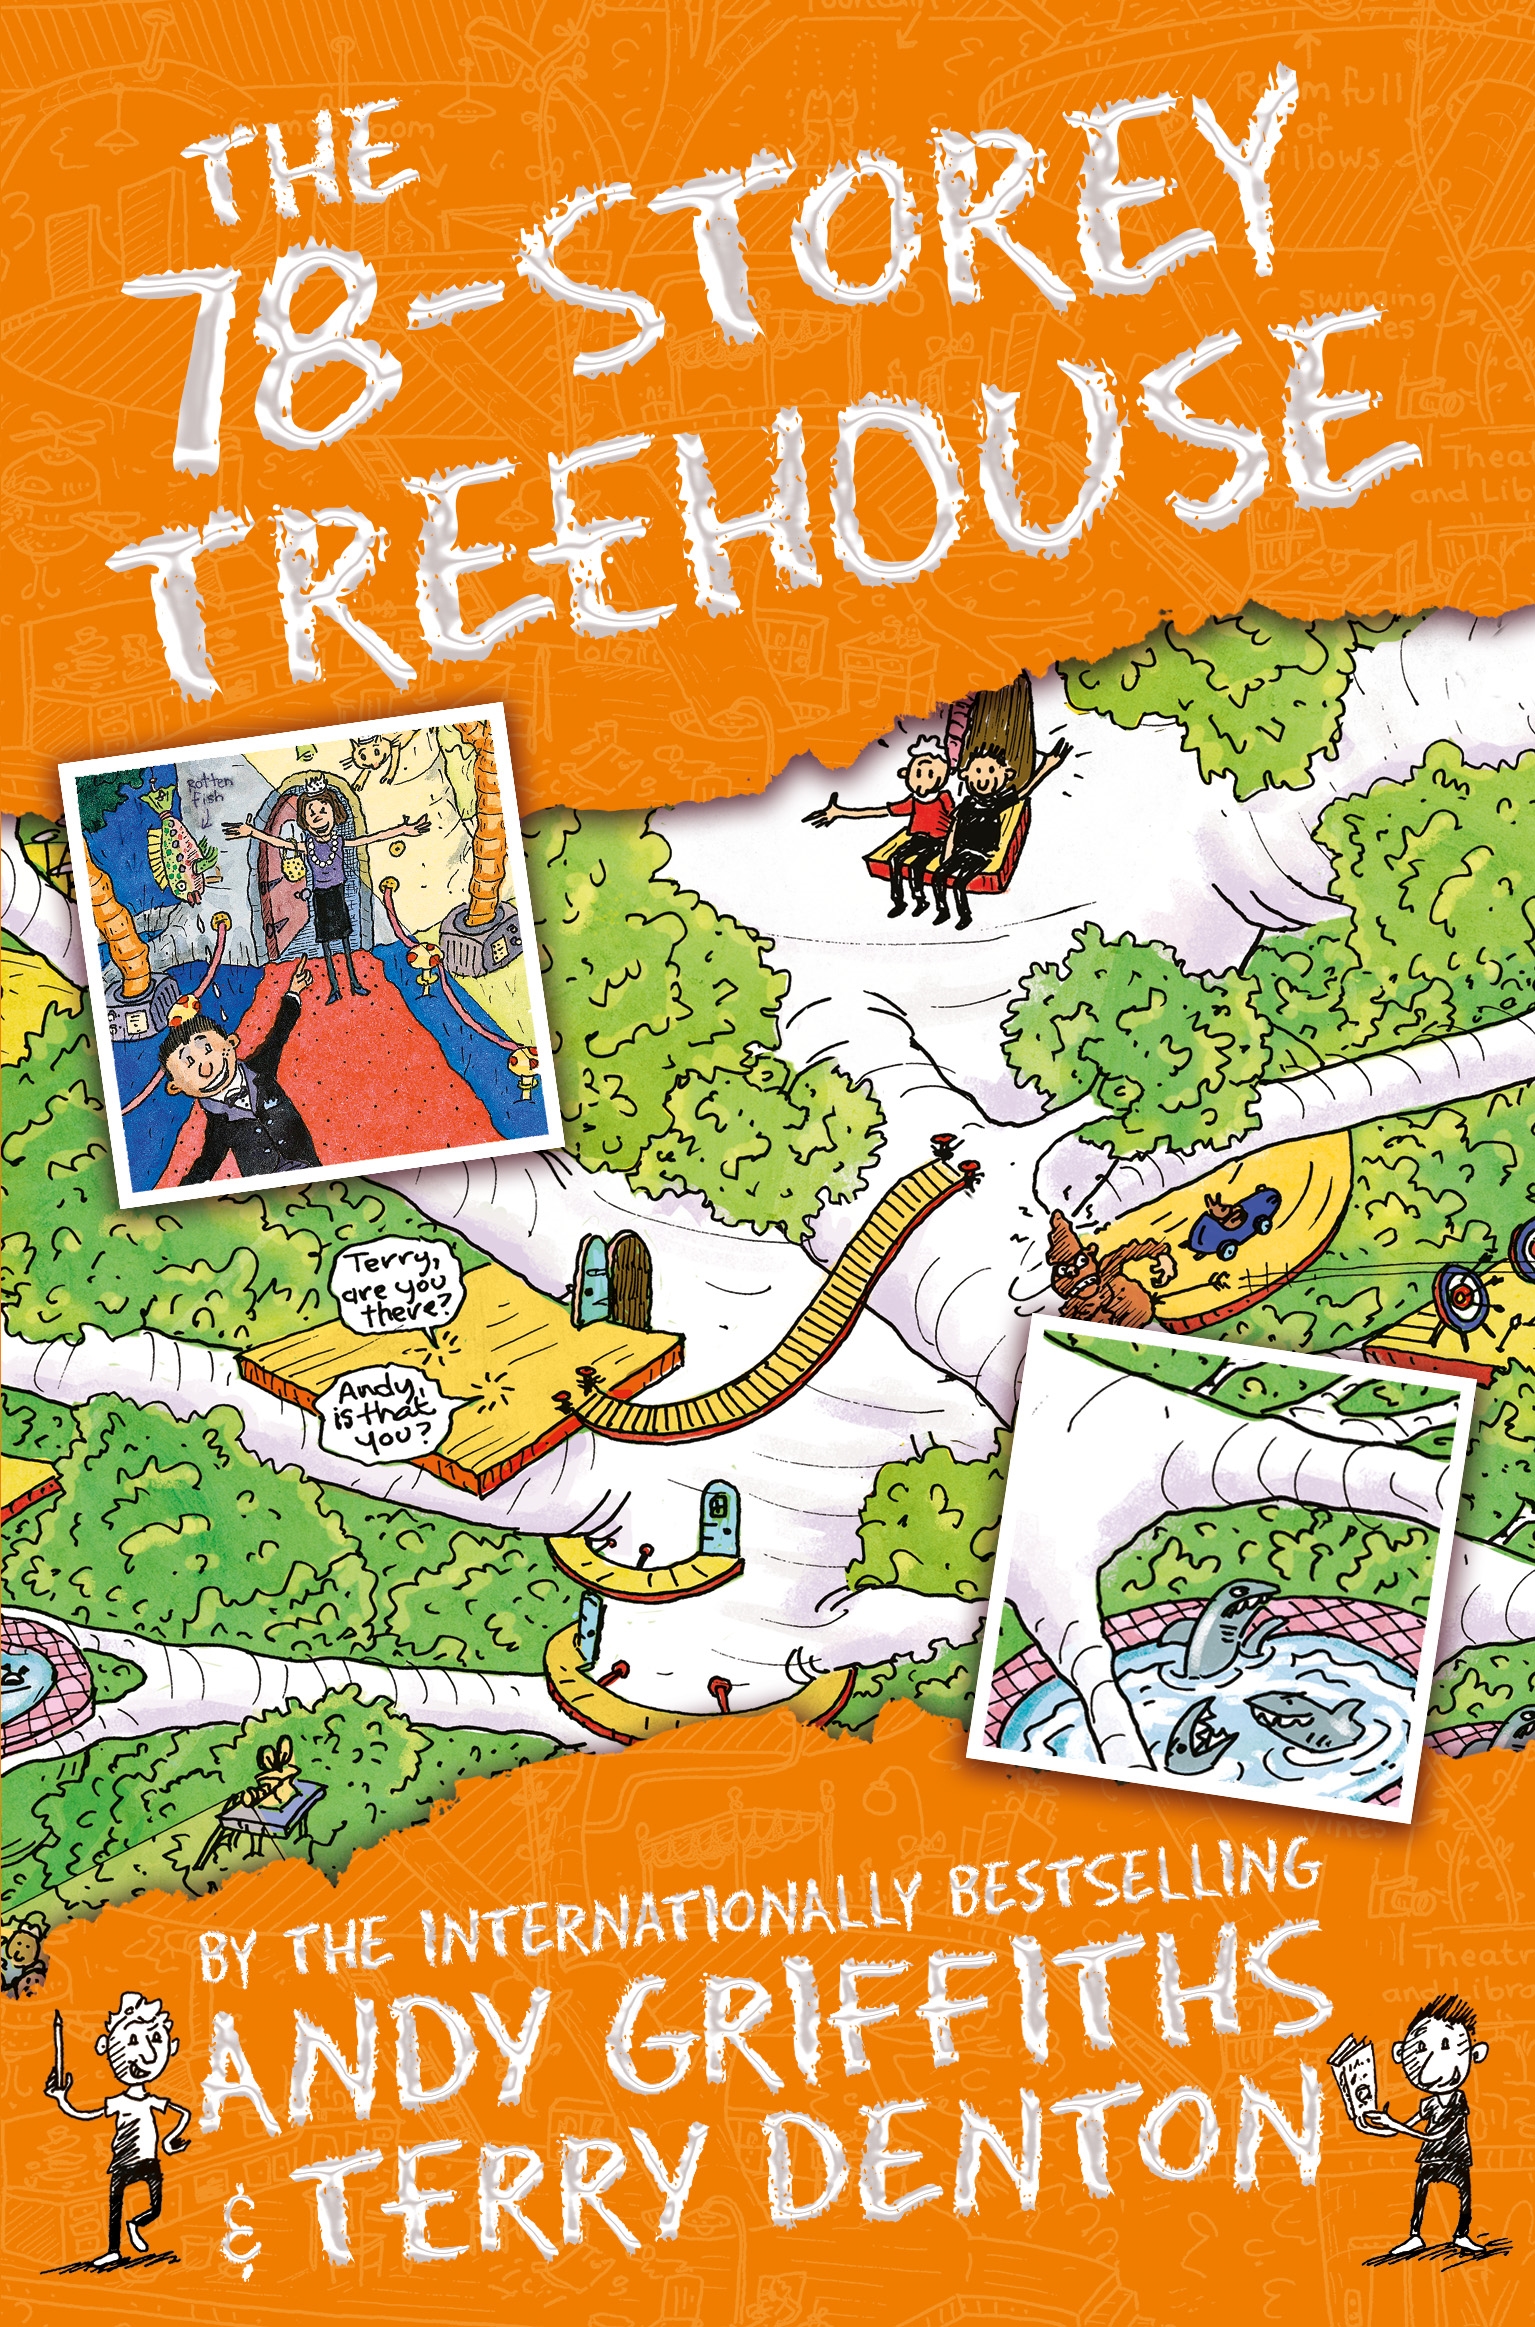 The 78-Storey Treehouse